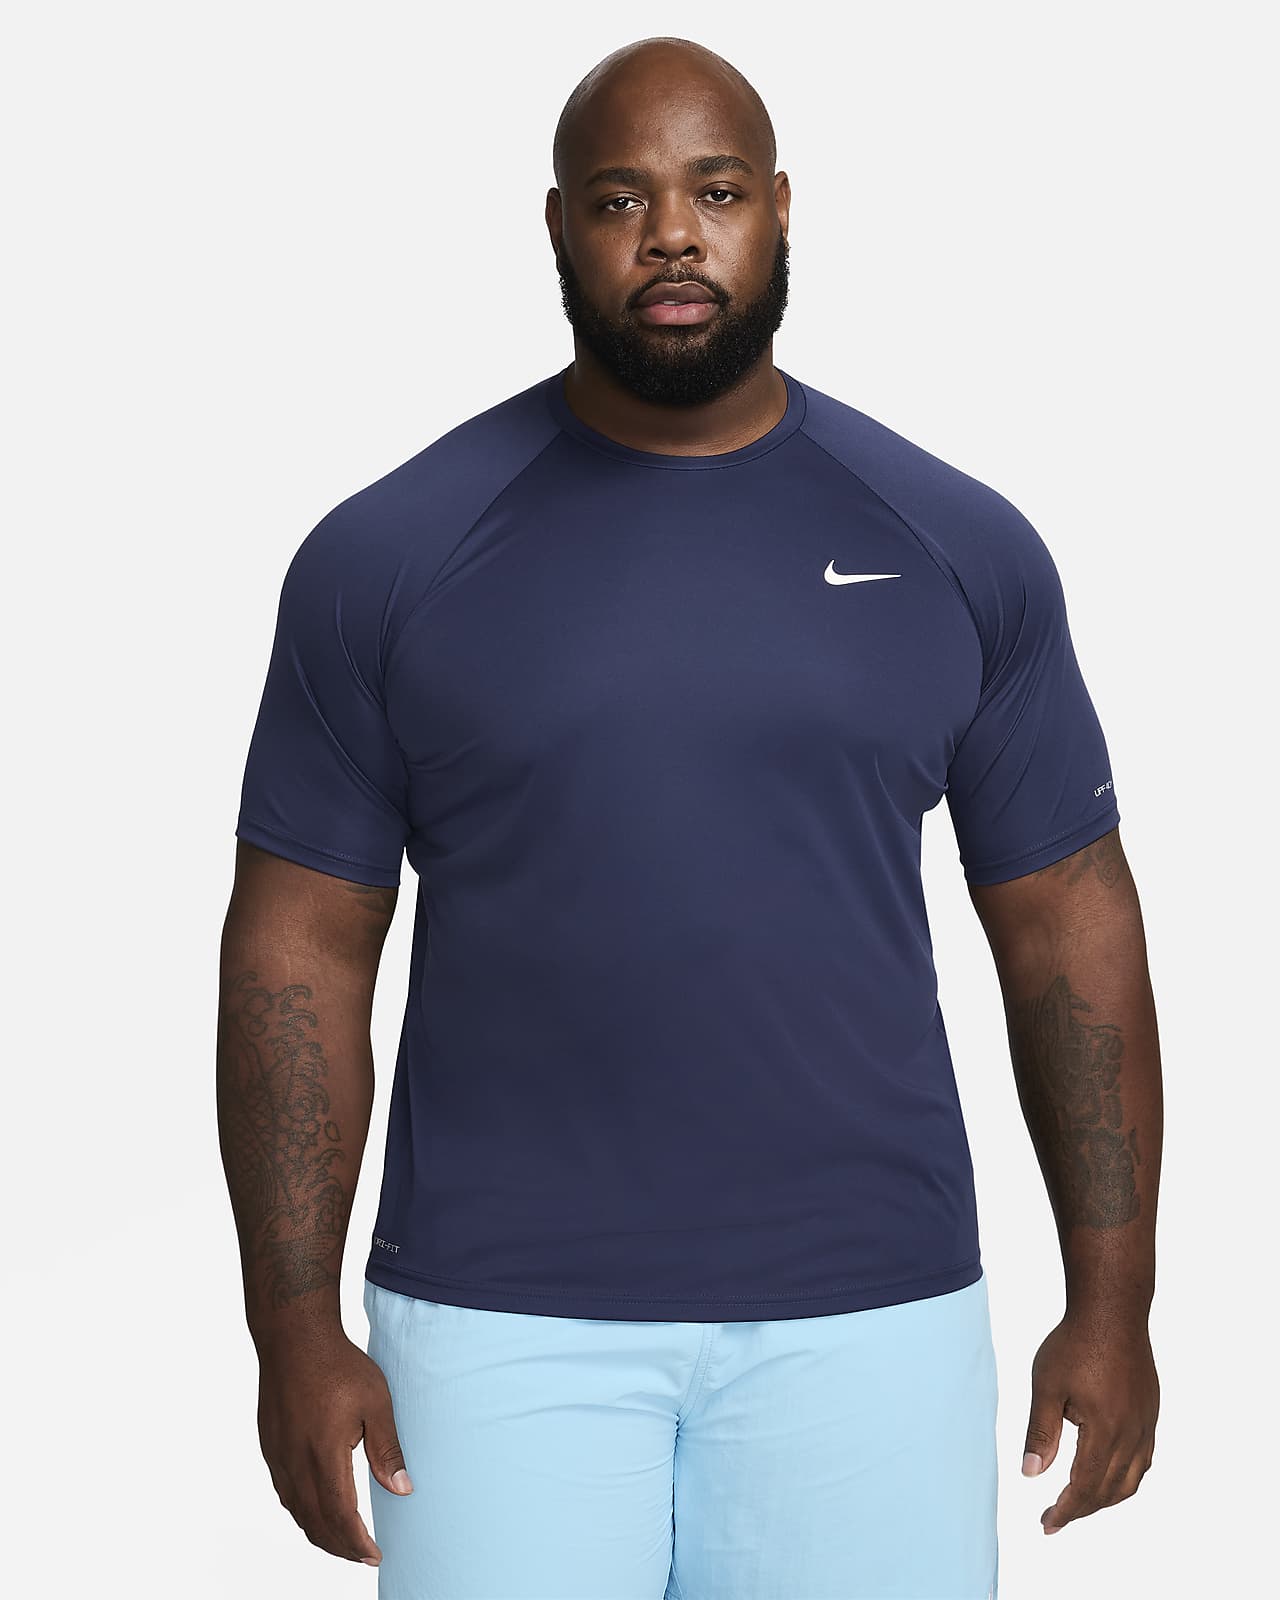 Nike Men's Hydro Short Sleeve Swim Shirt at